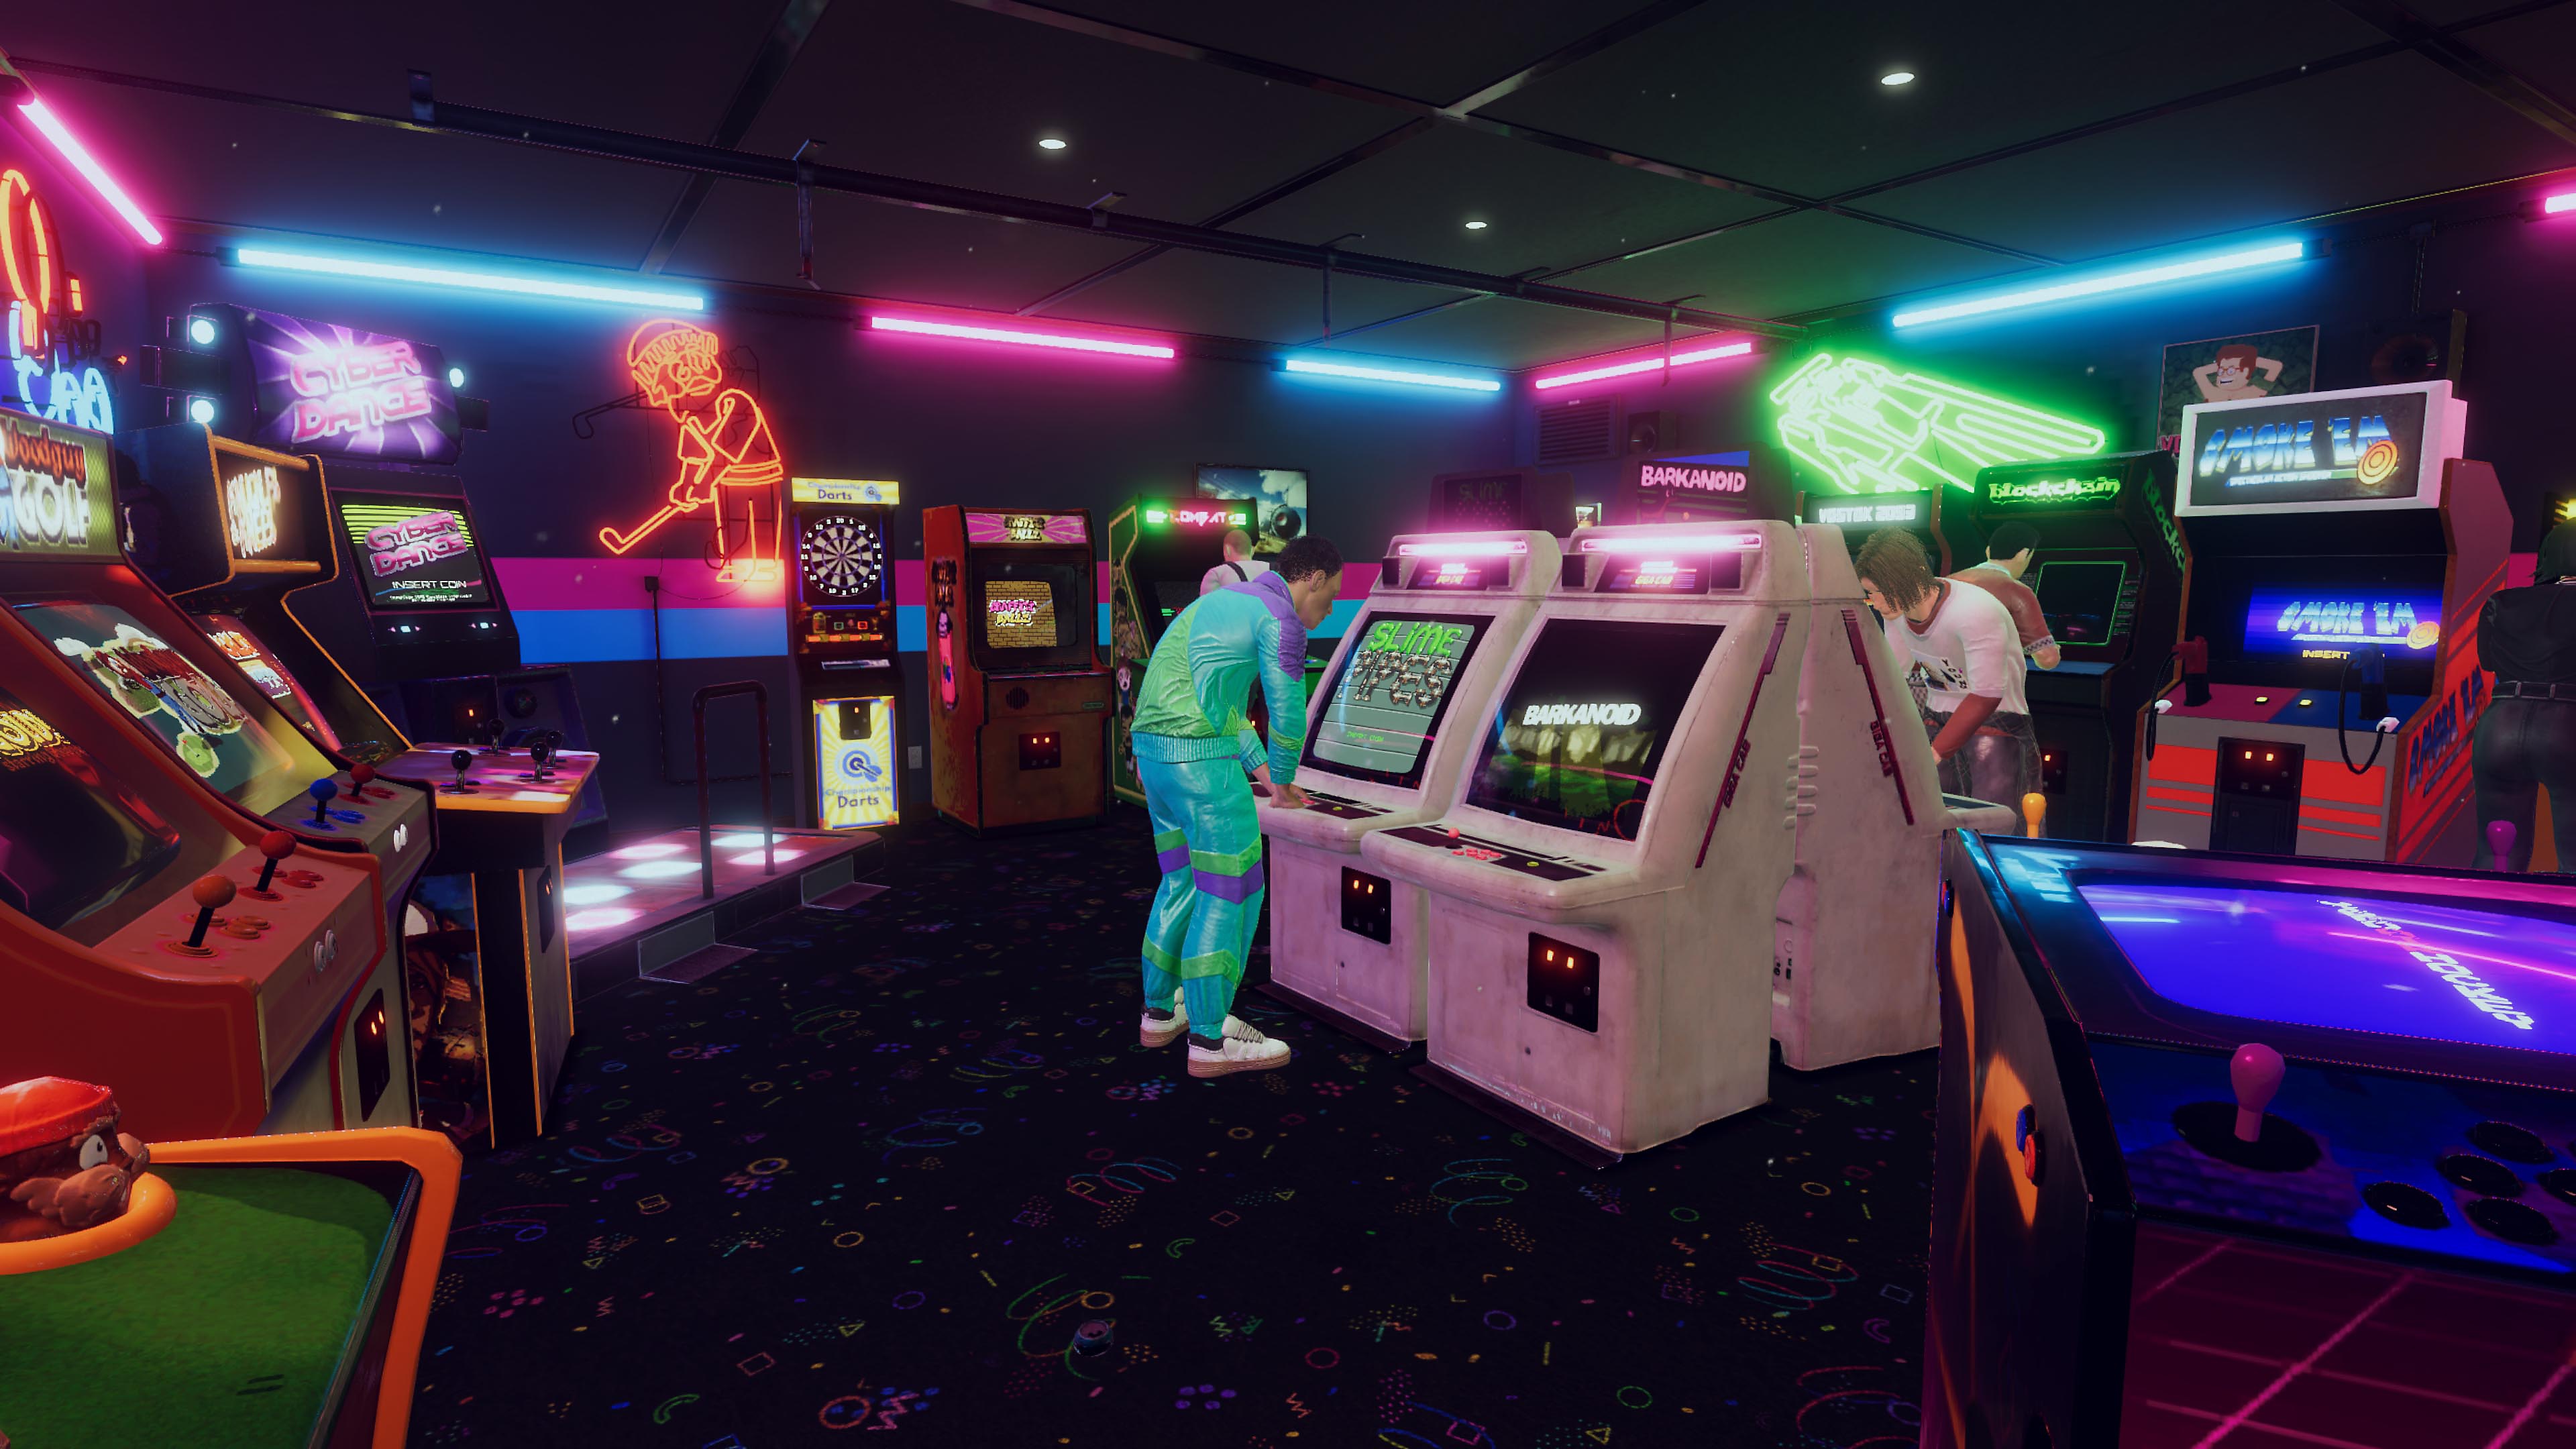 《Arcade Paradise》截屏，显示有着蓝色和粉红色霓虹灯的90年代风格复古街机